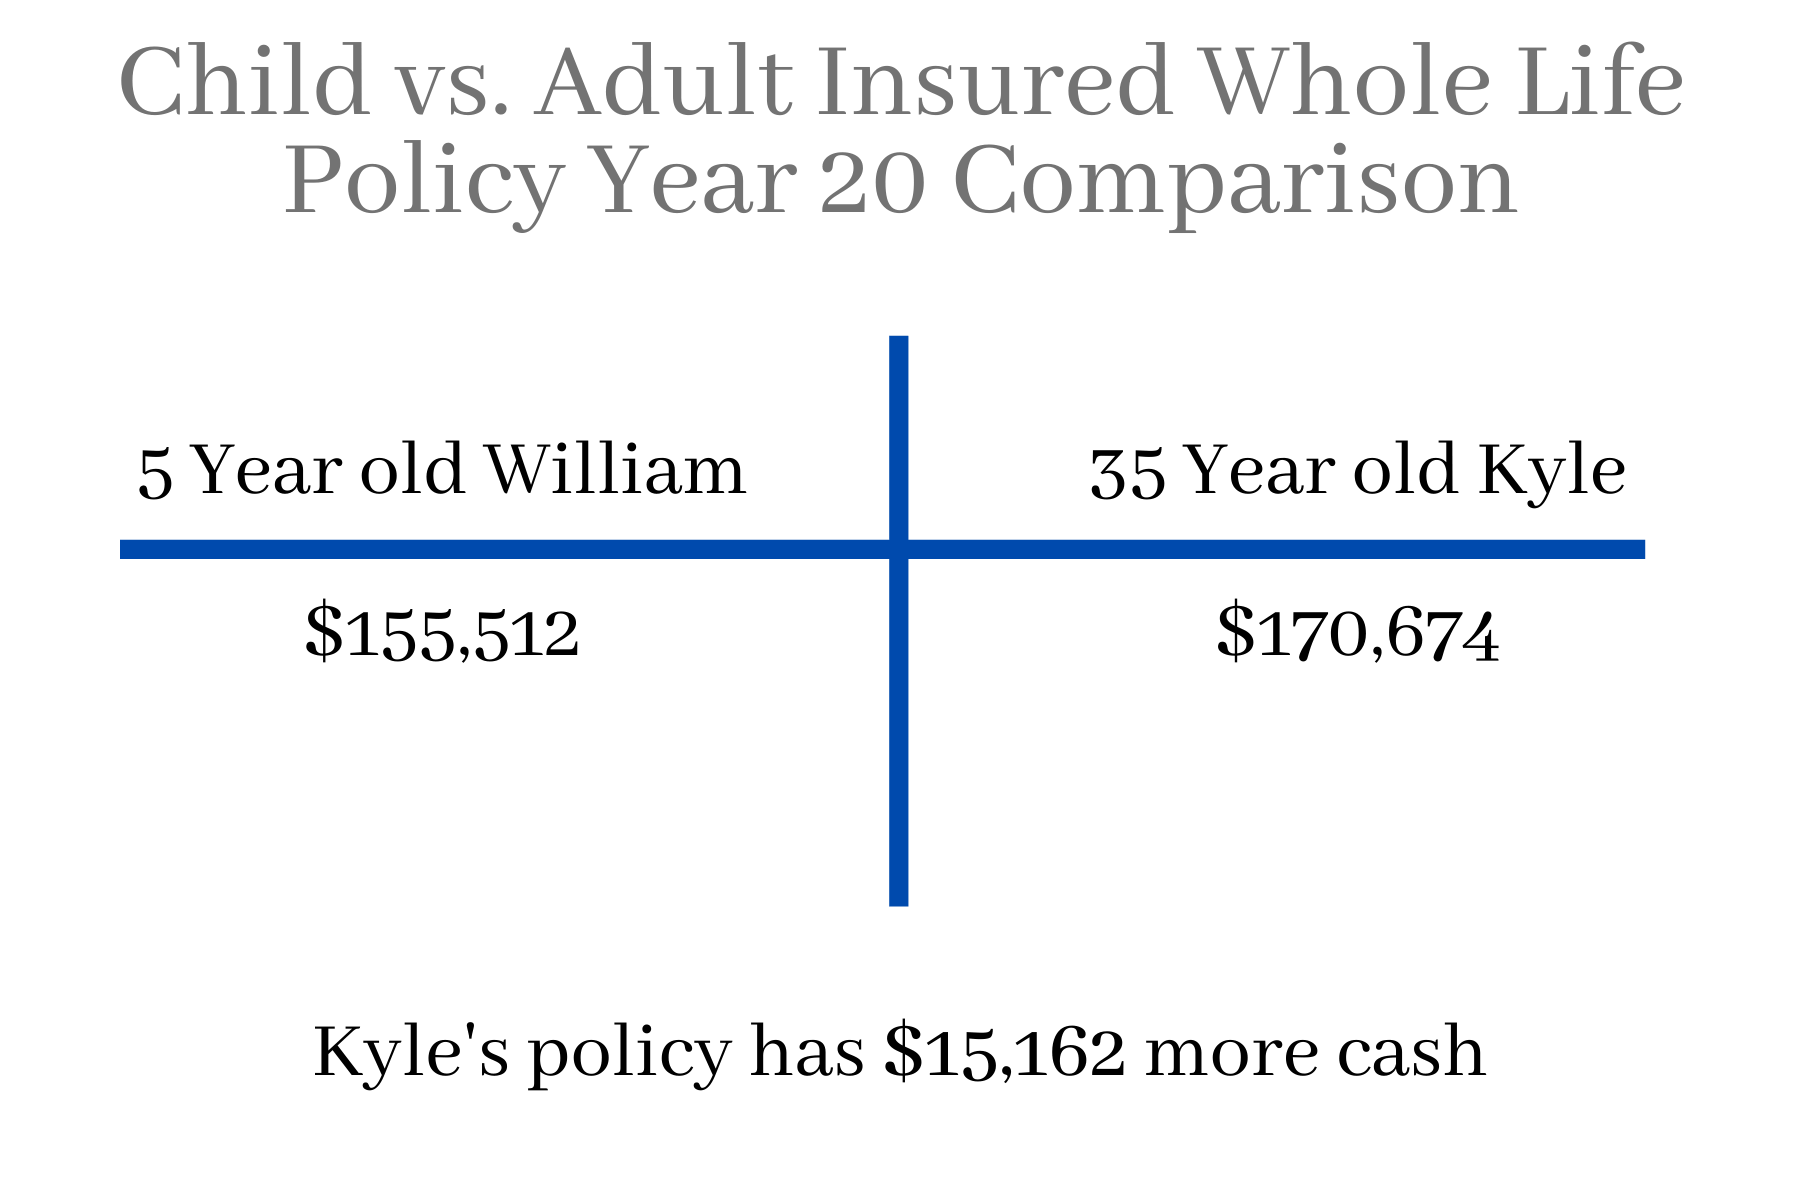 Child vs. Adult Whole Life Policy Comparison